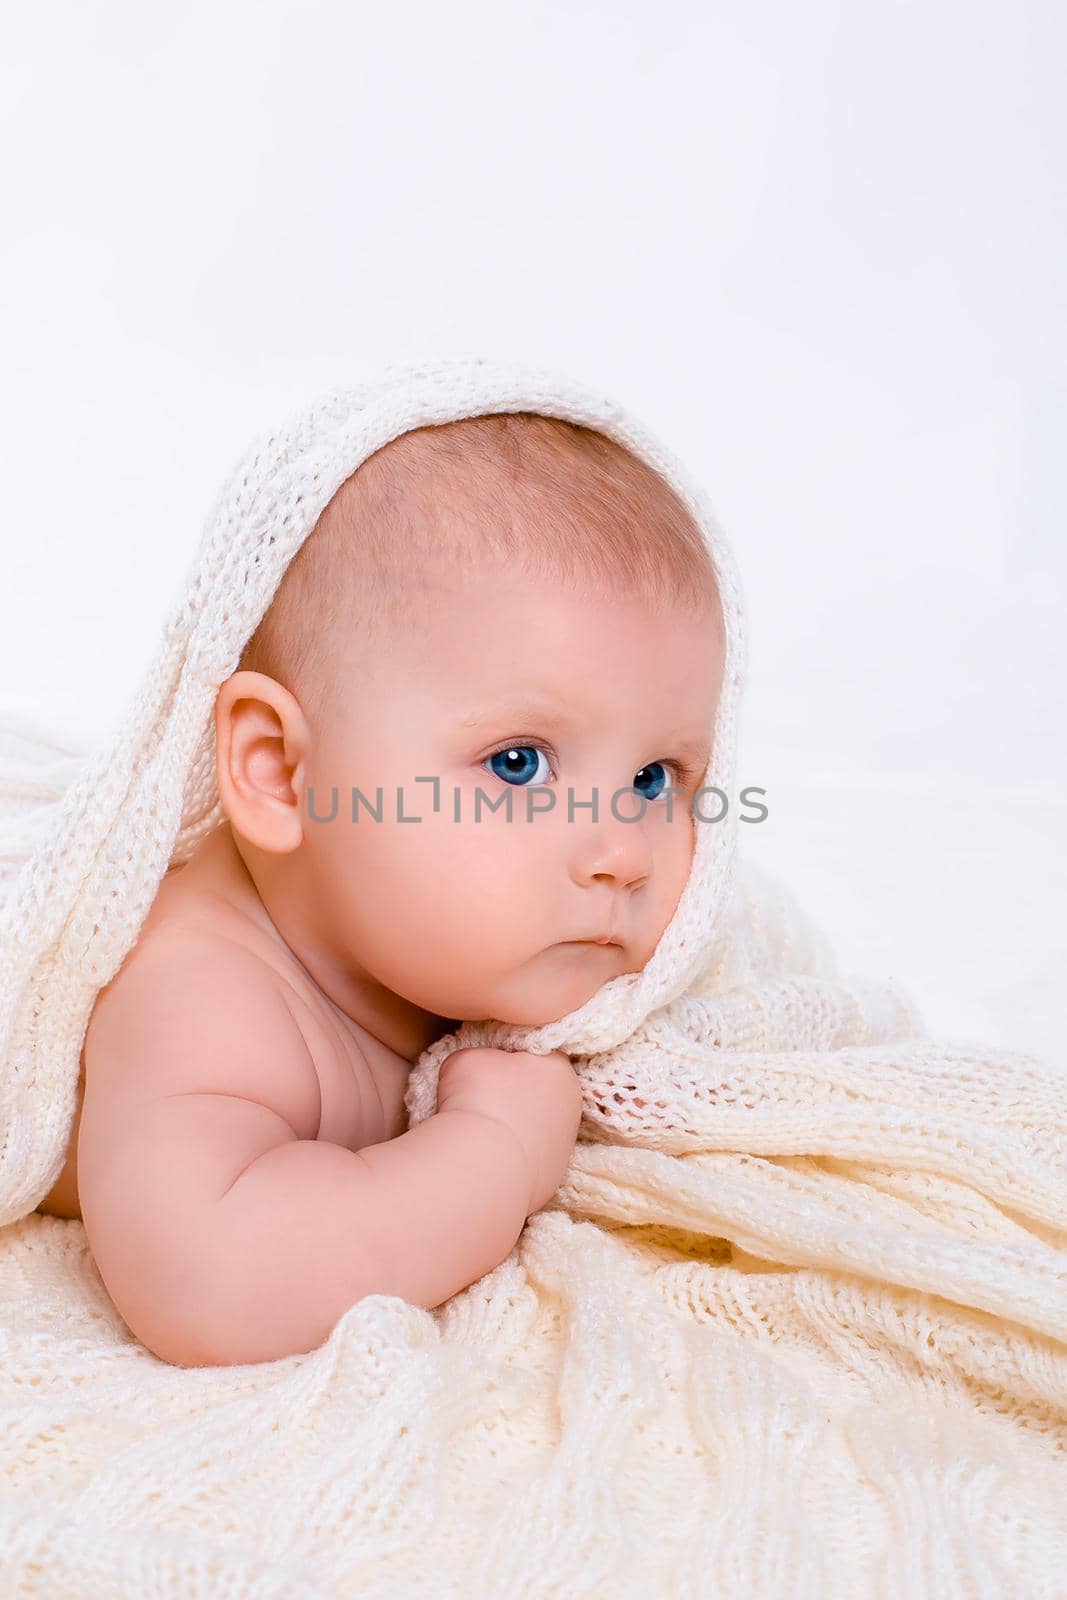 Cute baby girl on white background with isolation by nazarovsergey